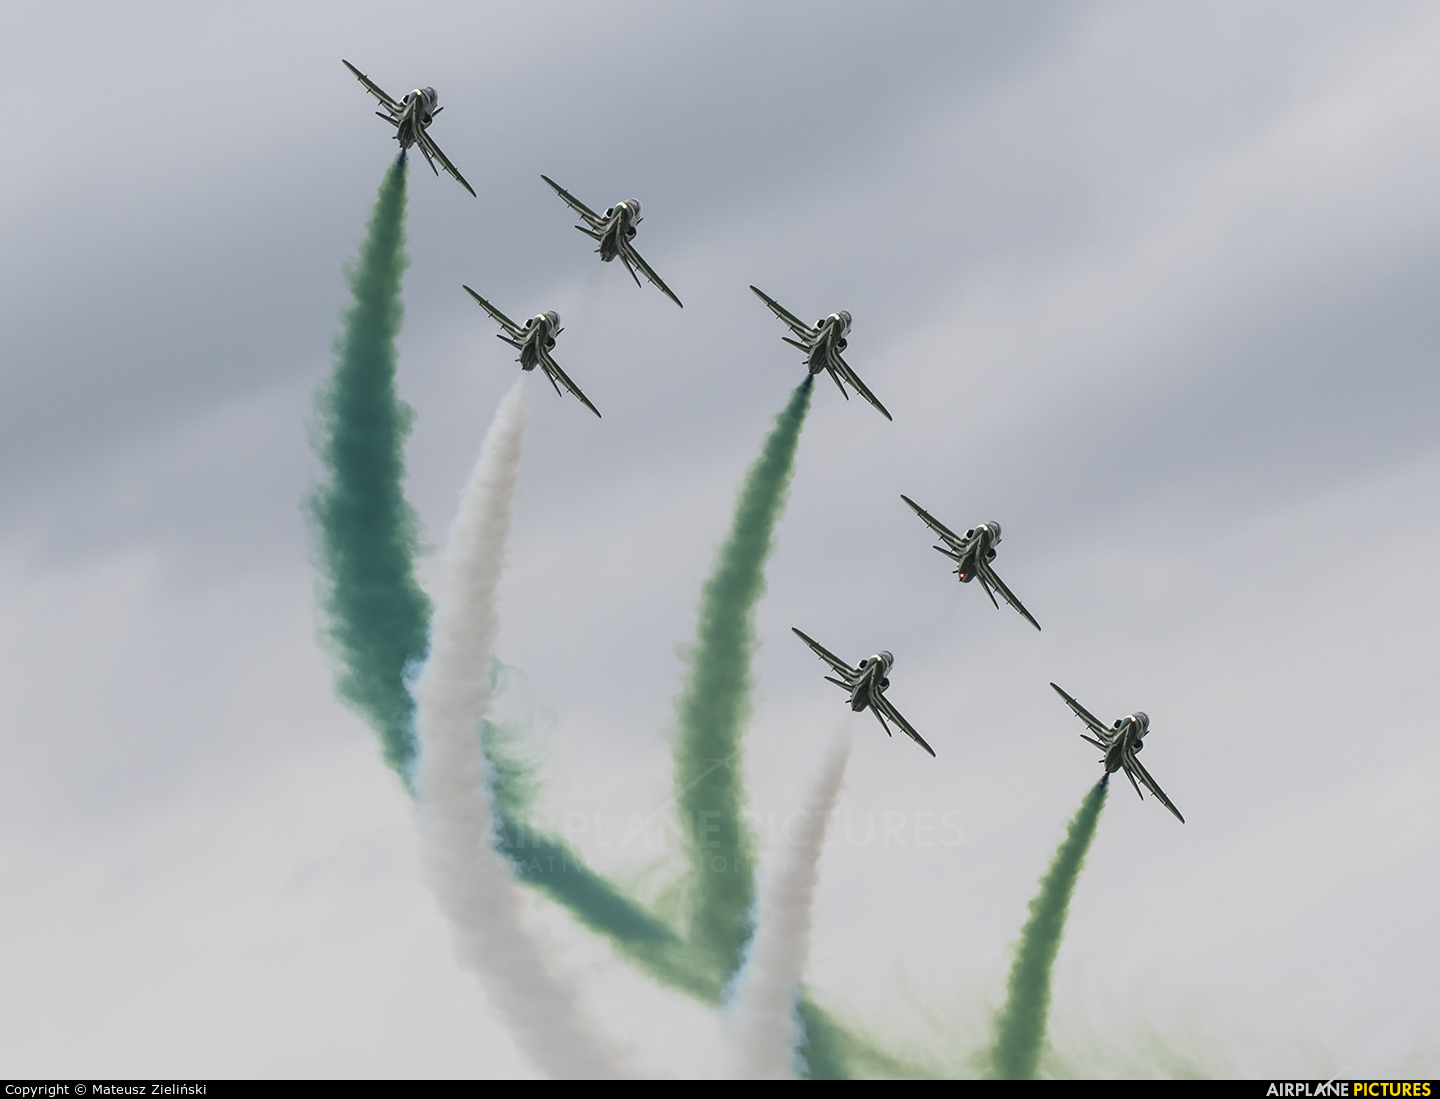 Saudi Arabia - Air Force: Saudi Hawks 8820 aircraft at Gdynia- Babie Doły (Oksywie)